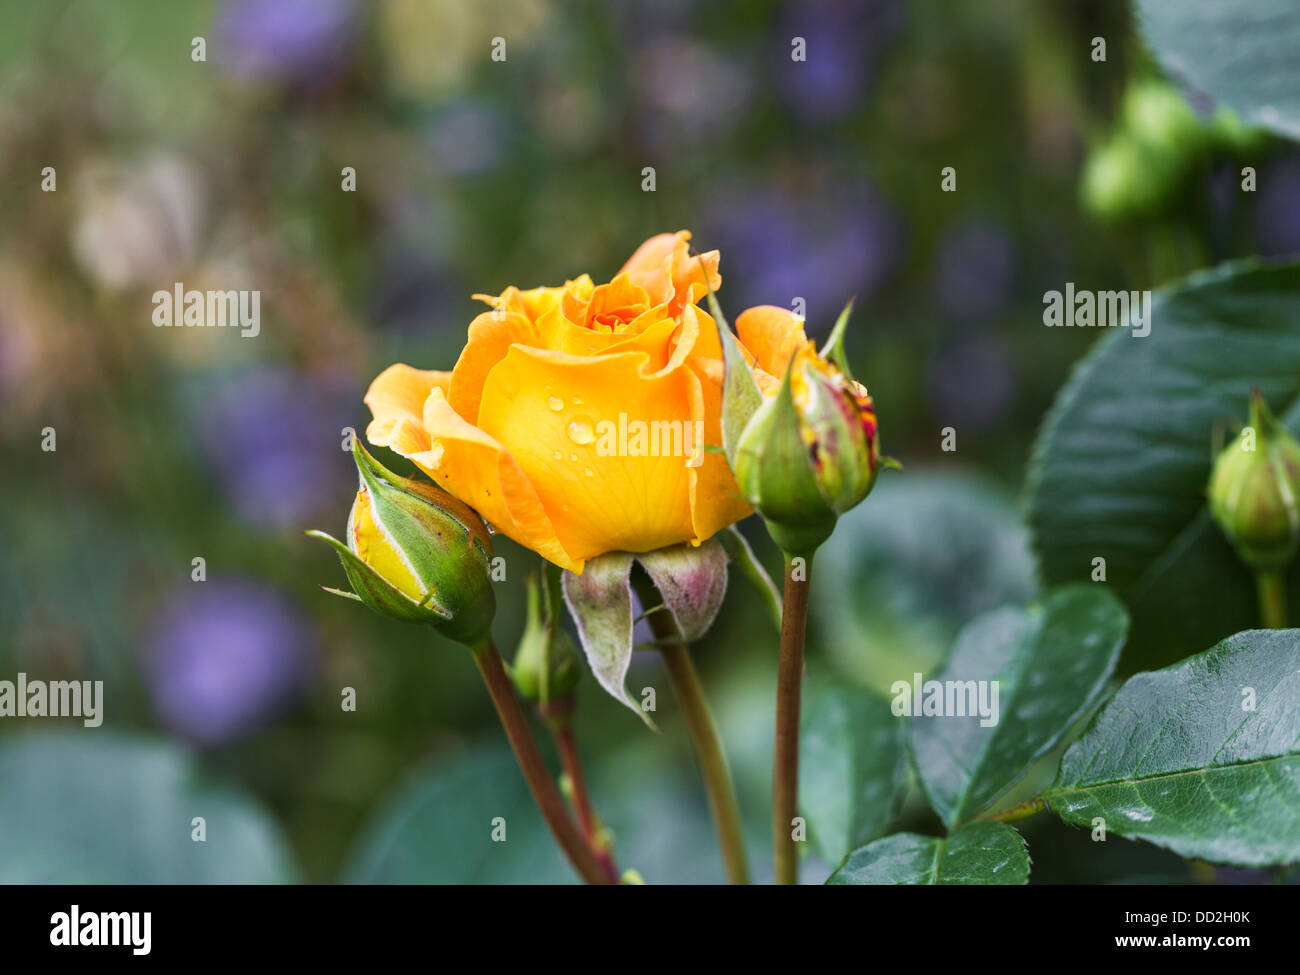 A rosebud of the beautiful orange rose, 'Bowled Over' Stock Photo